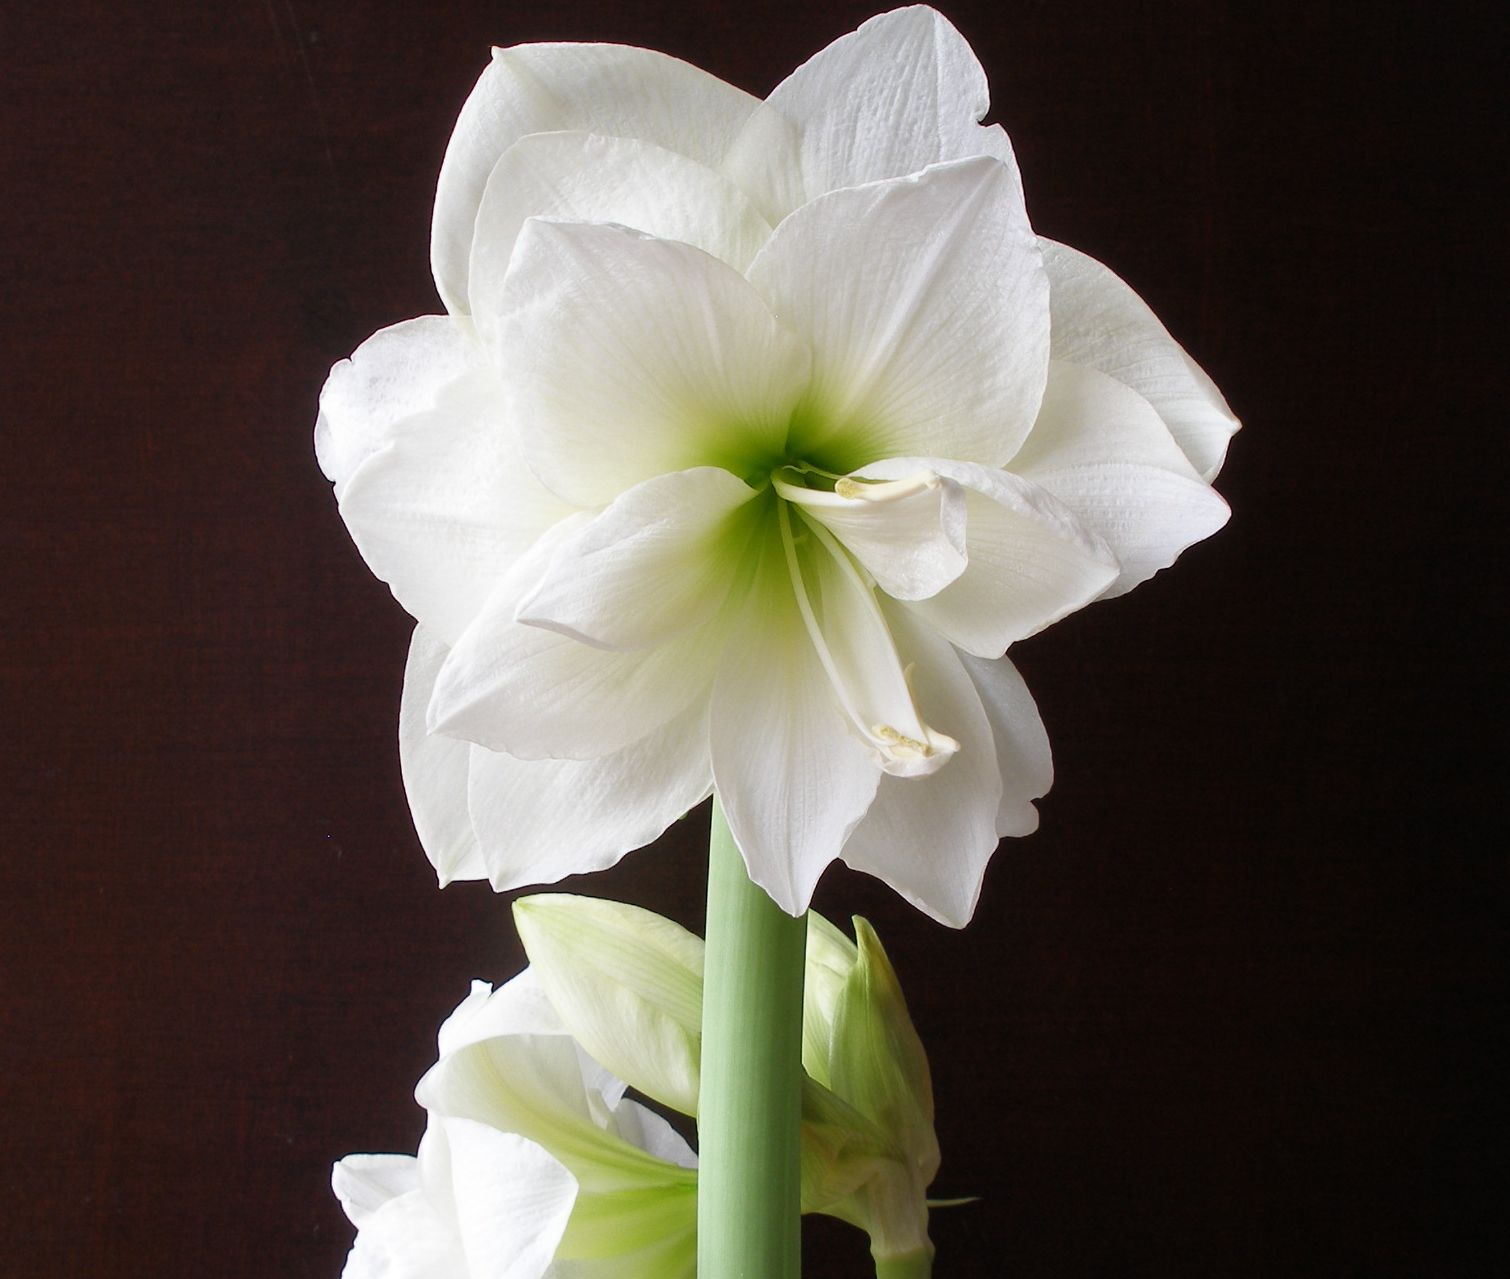 Фото как выглядит цветок гиппеаструм фото